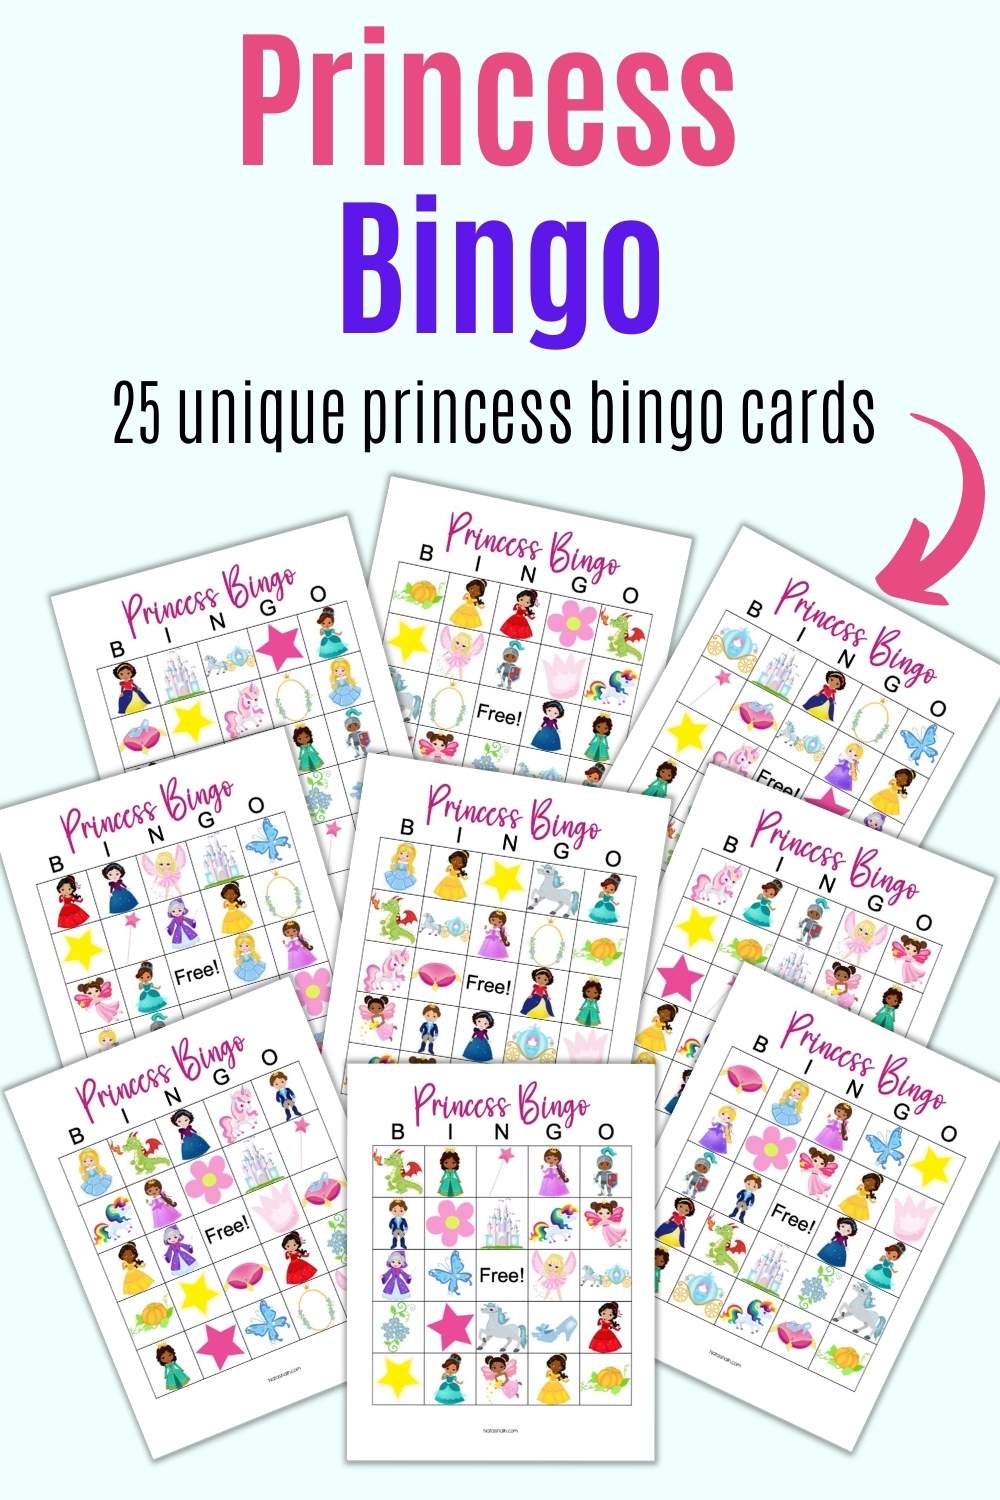 Tet "princess bingo  - 25 unique princess bingo cards"